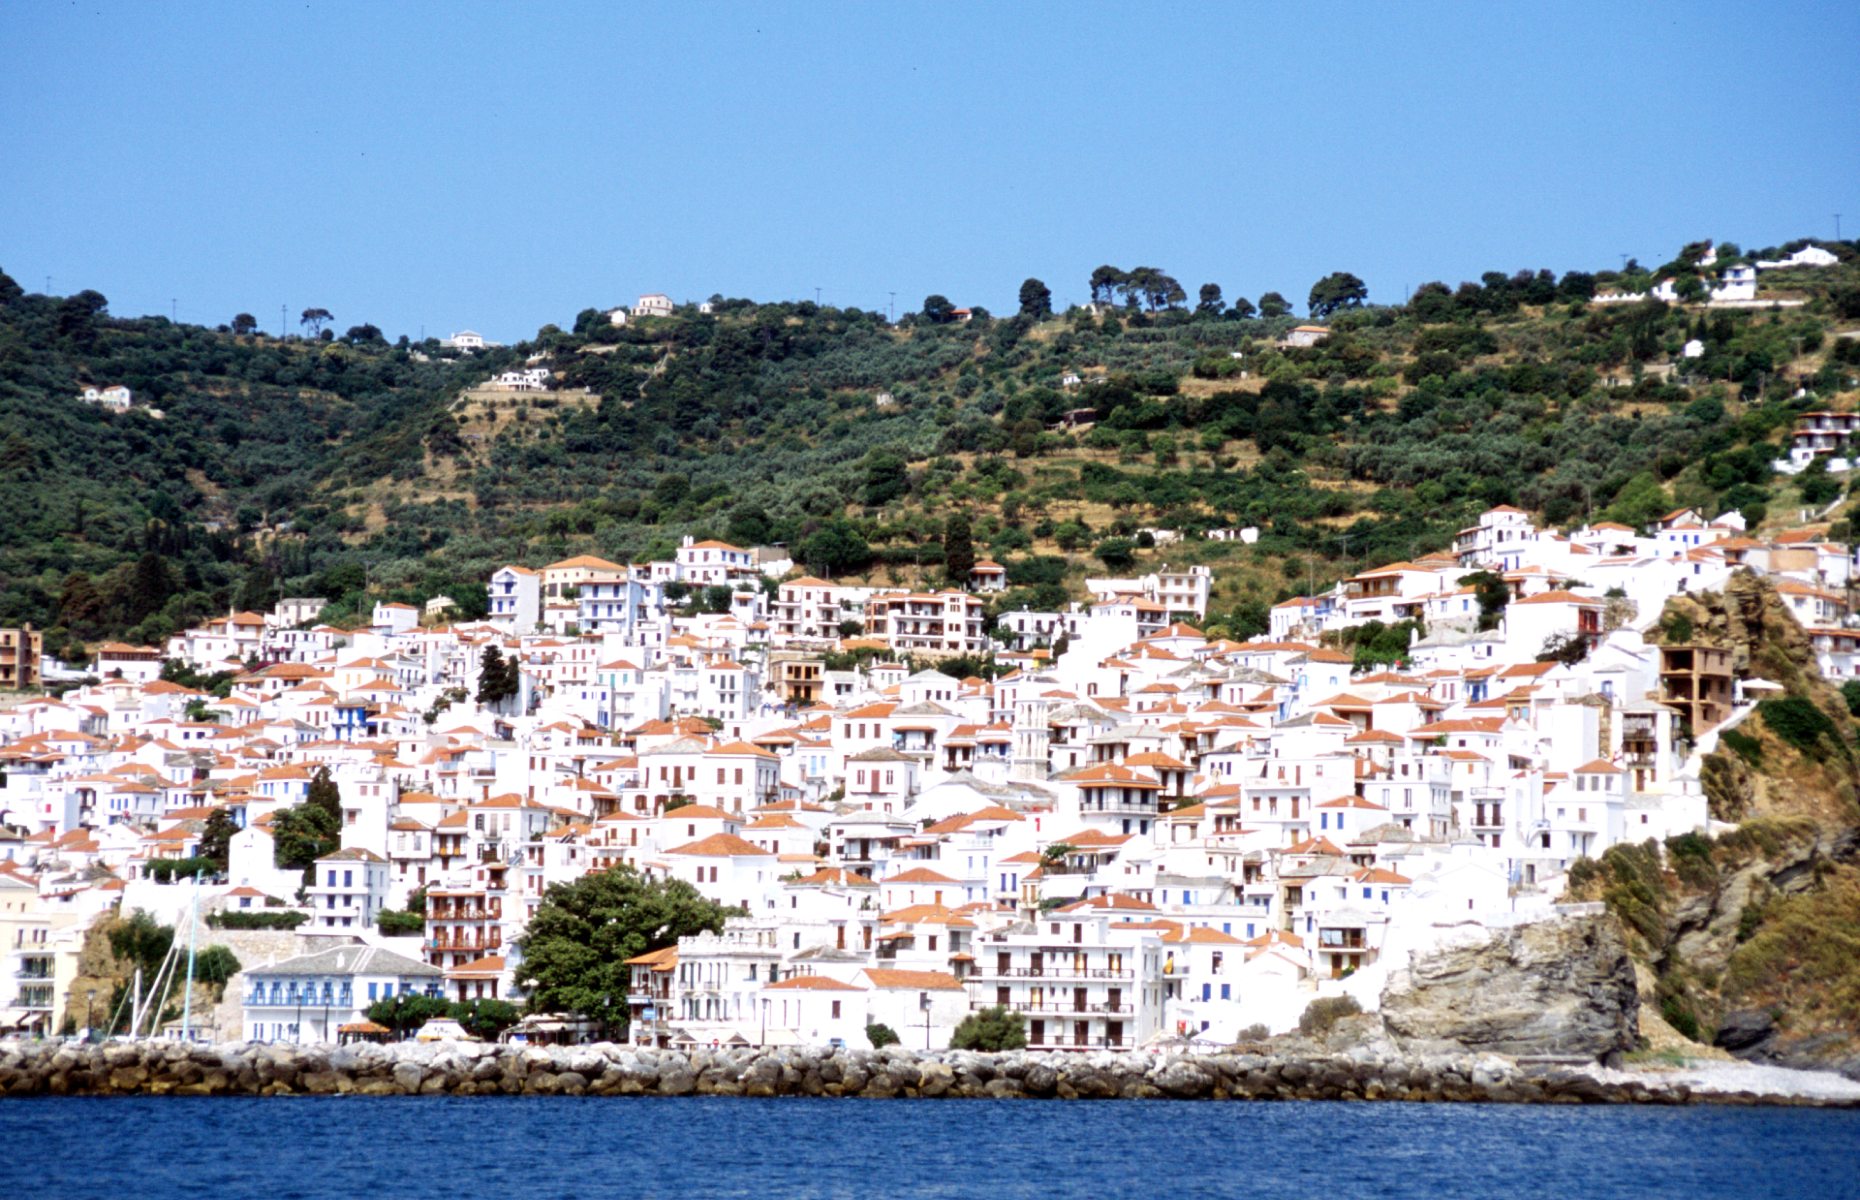 Skopelos (Image: AnnRayworth/AlamyStockPhoto)